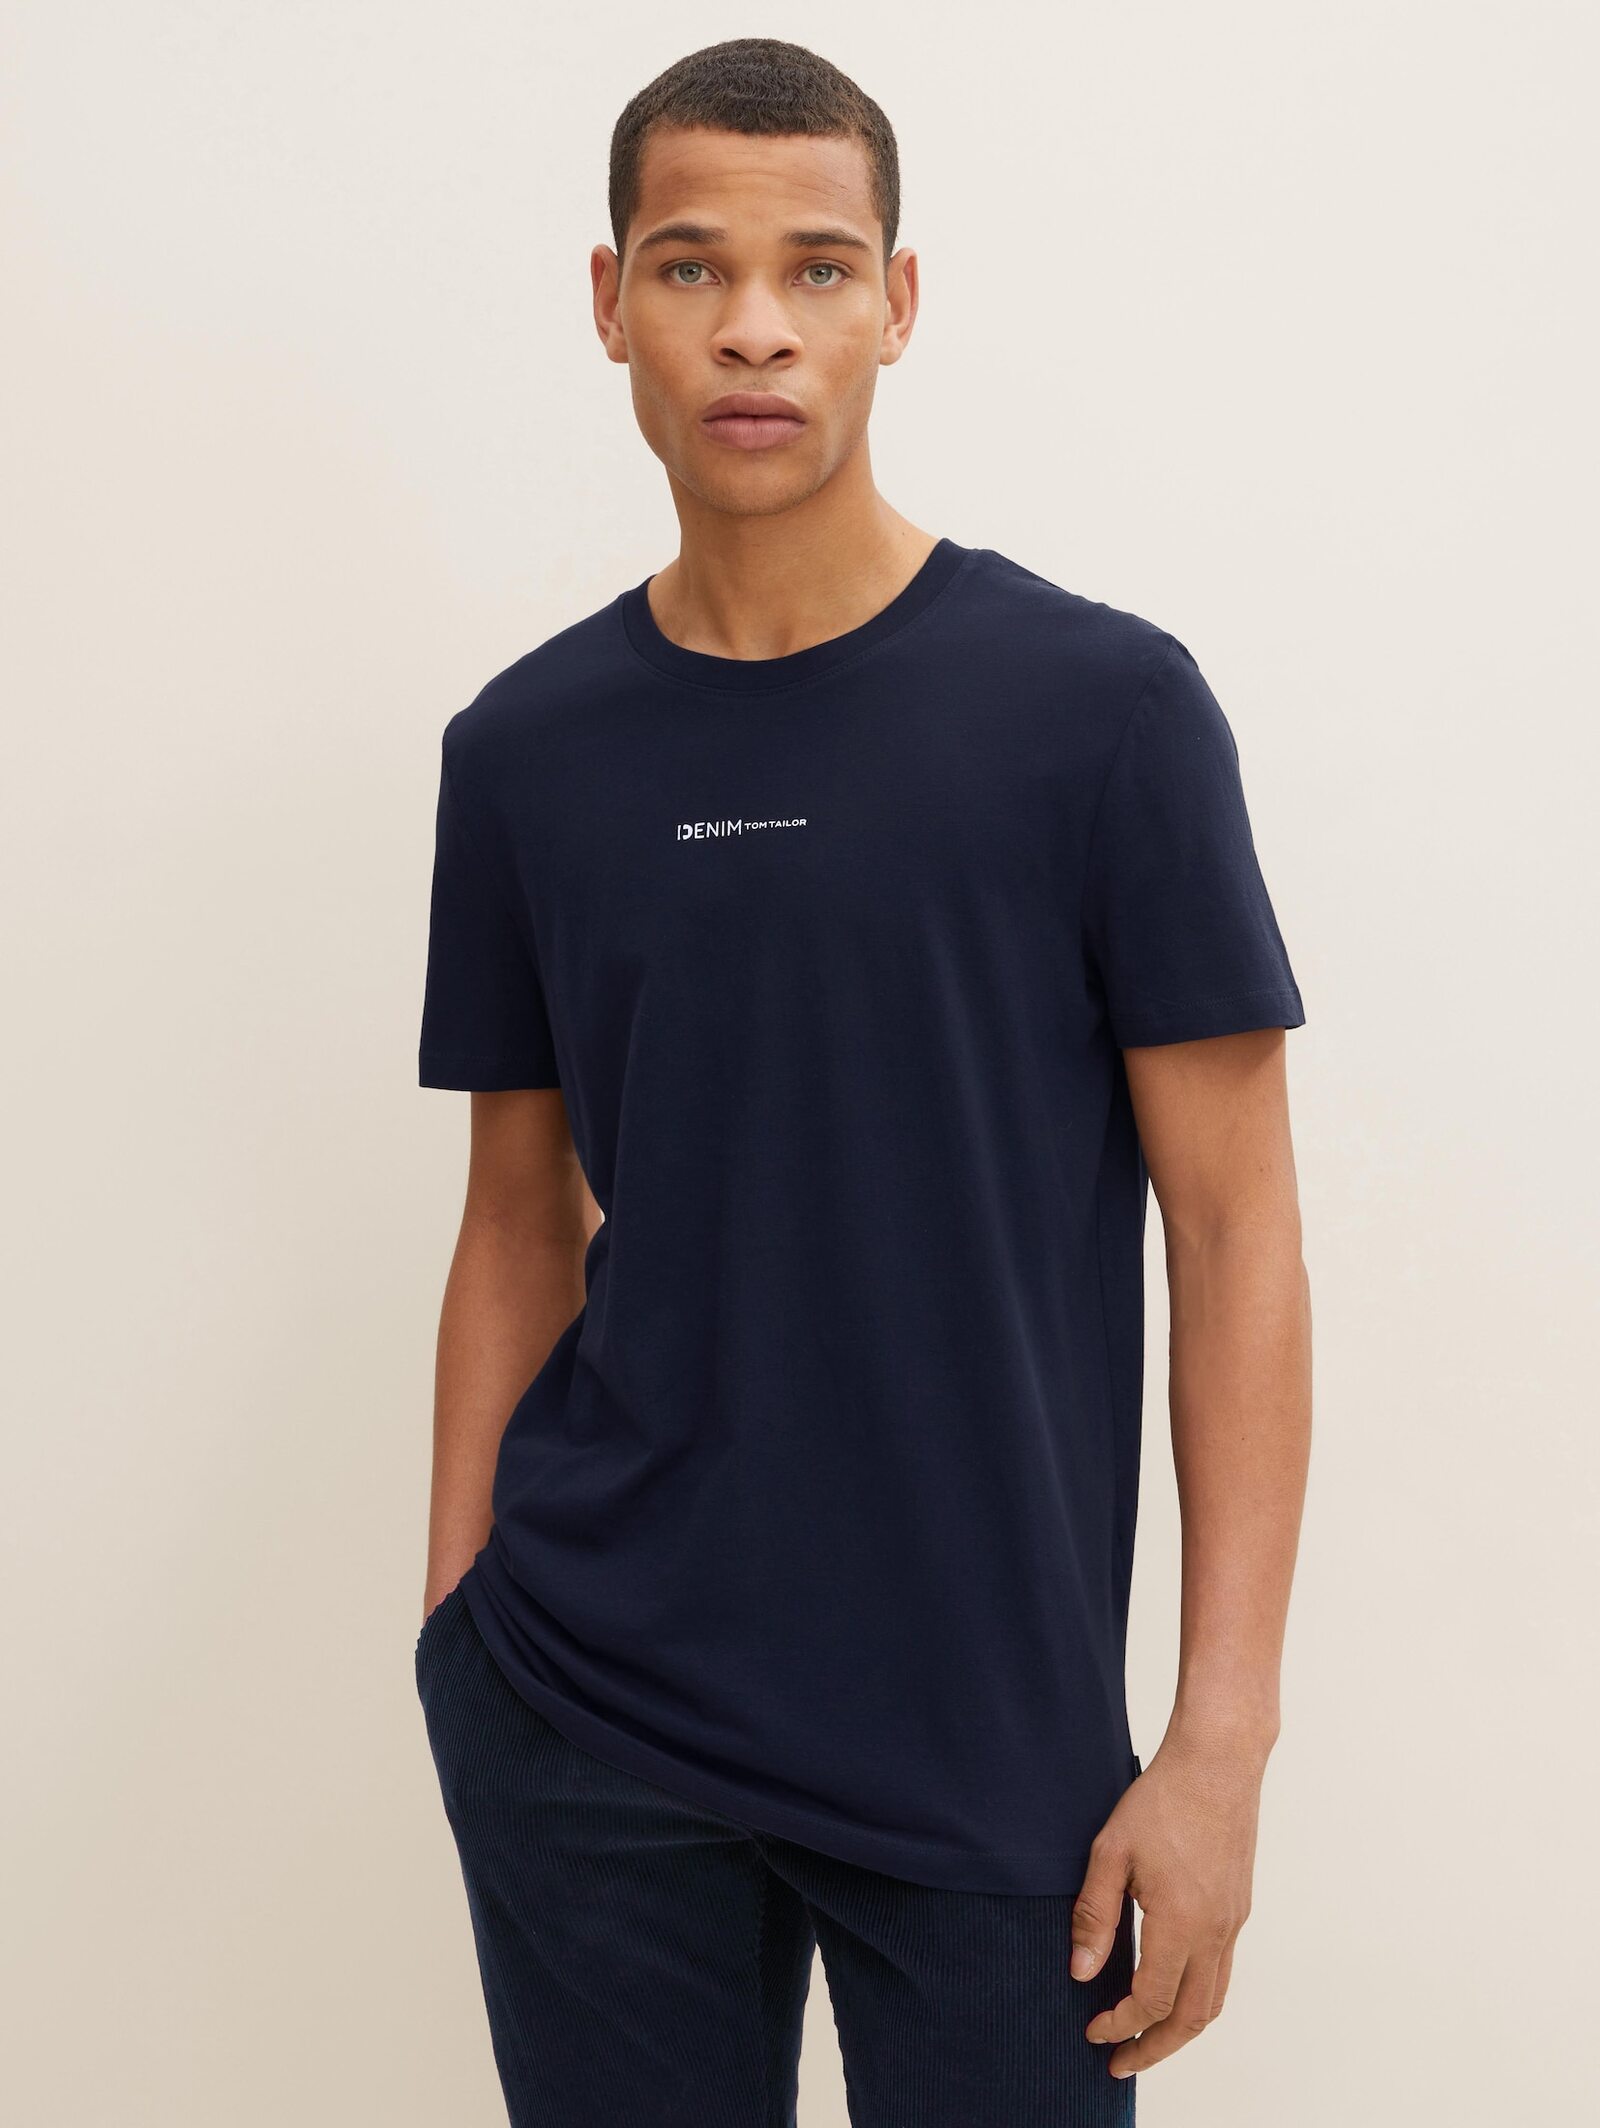 Denim Tom Tailor® T-shirt Blue with L logo Size Captain Sky - a print